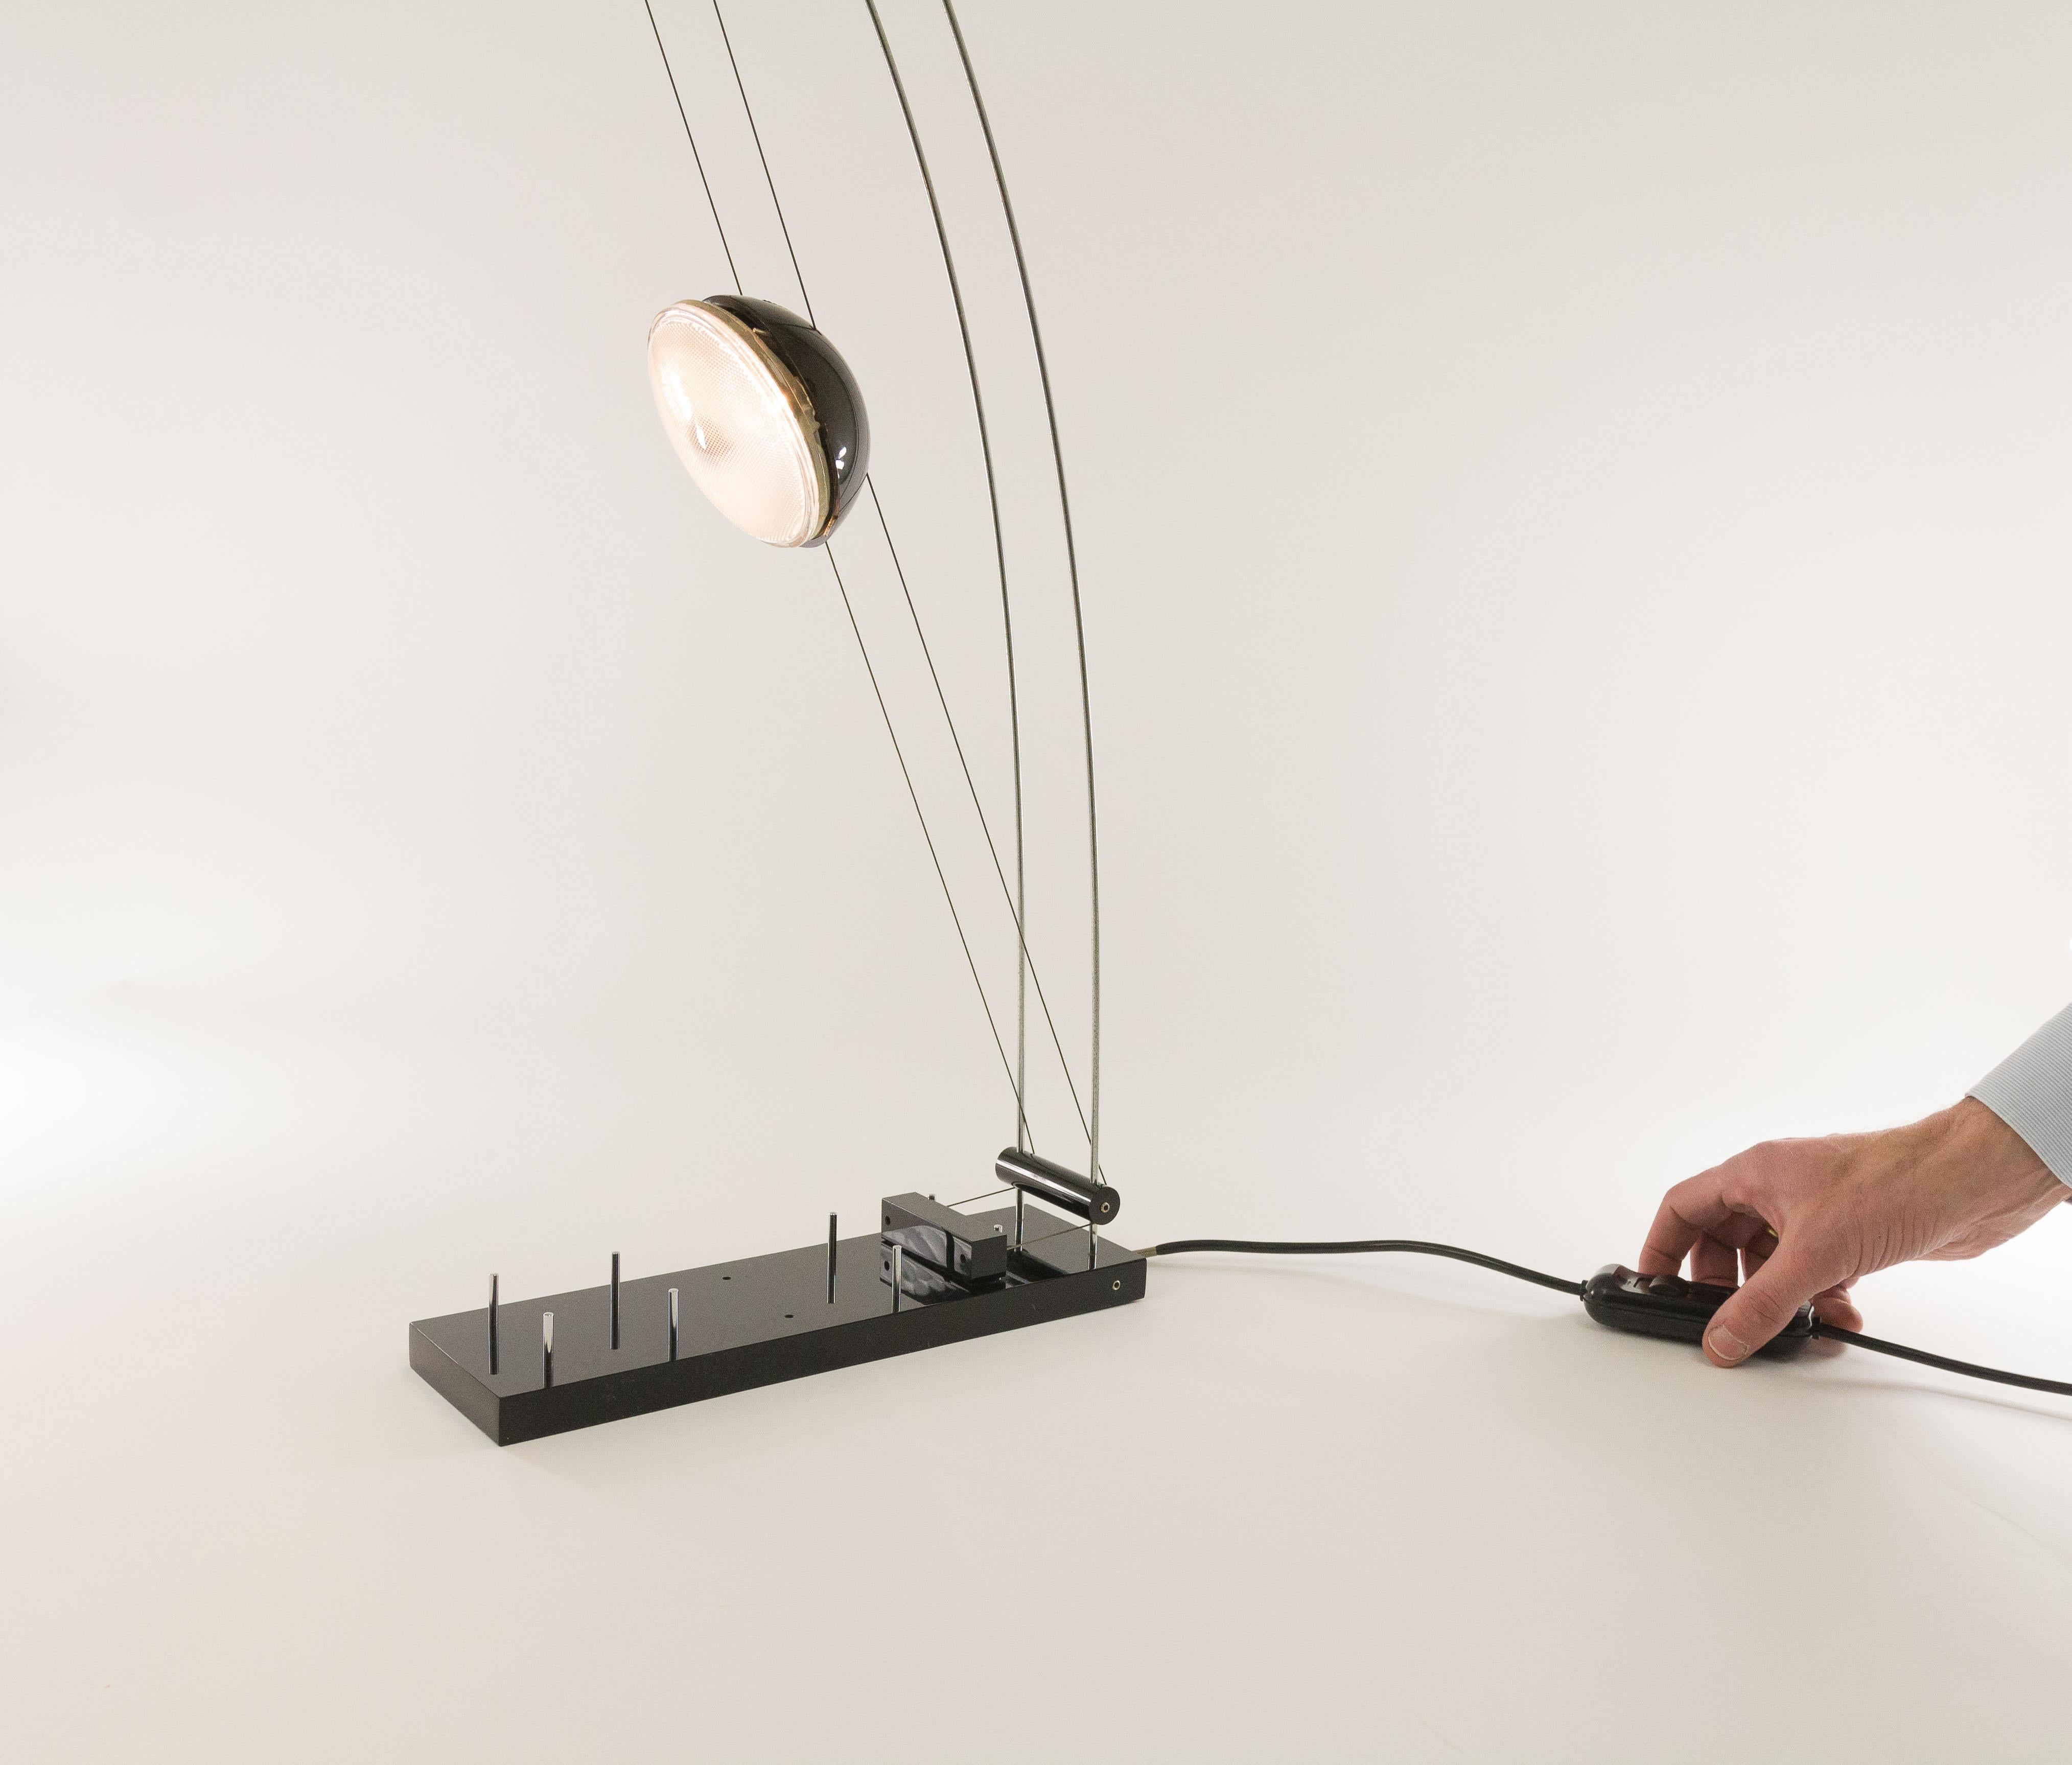 Lighting Sculpture 'Arco-nero' Designed by Axel Meise for AML Licht + Design 2